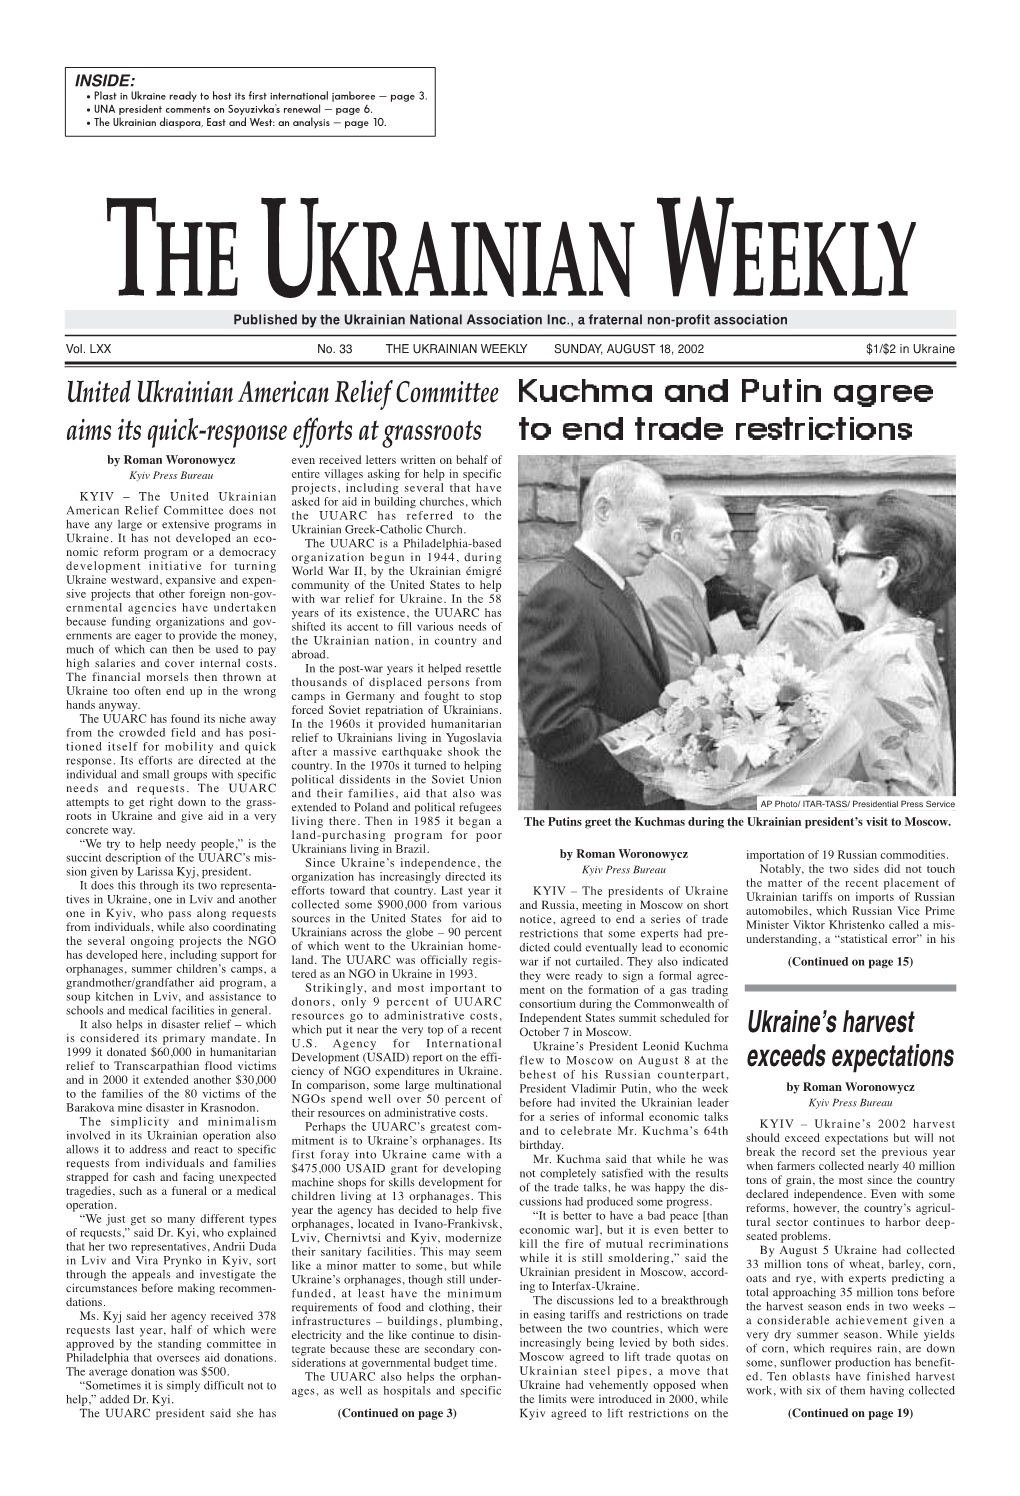 The Ukrainian Weekly 2002, No.33